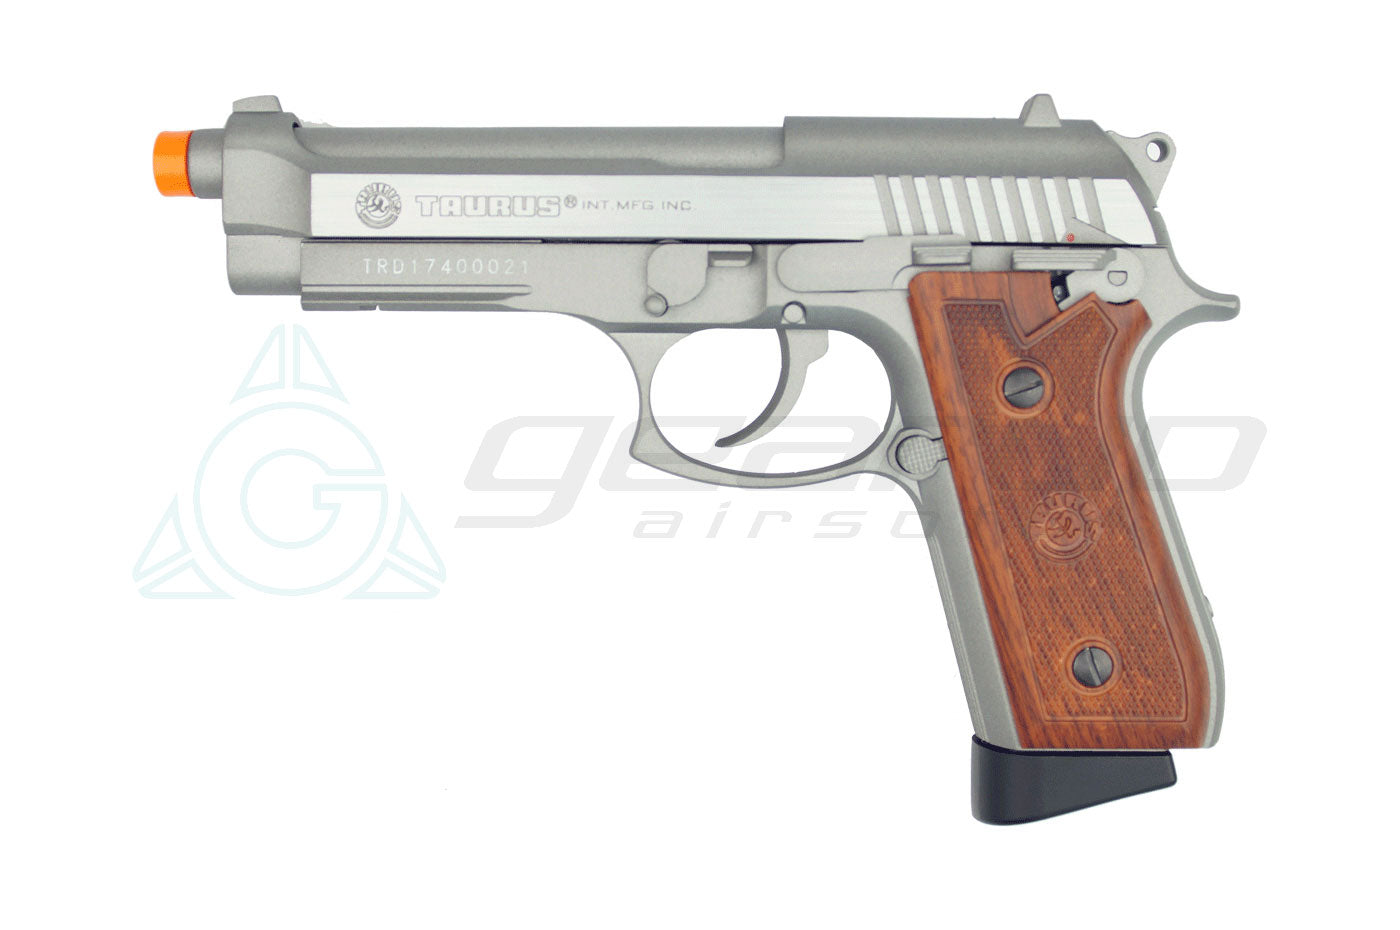 CYBERGUN Taurus PT92 CO2 Full Metal Blowback Pistol, Semi-FULL Auto- Silver-Wood Style Grip